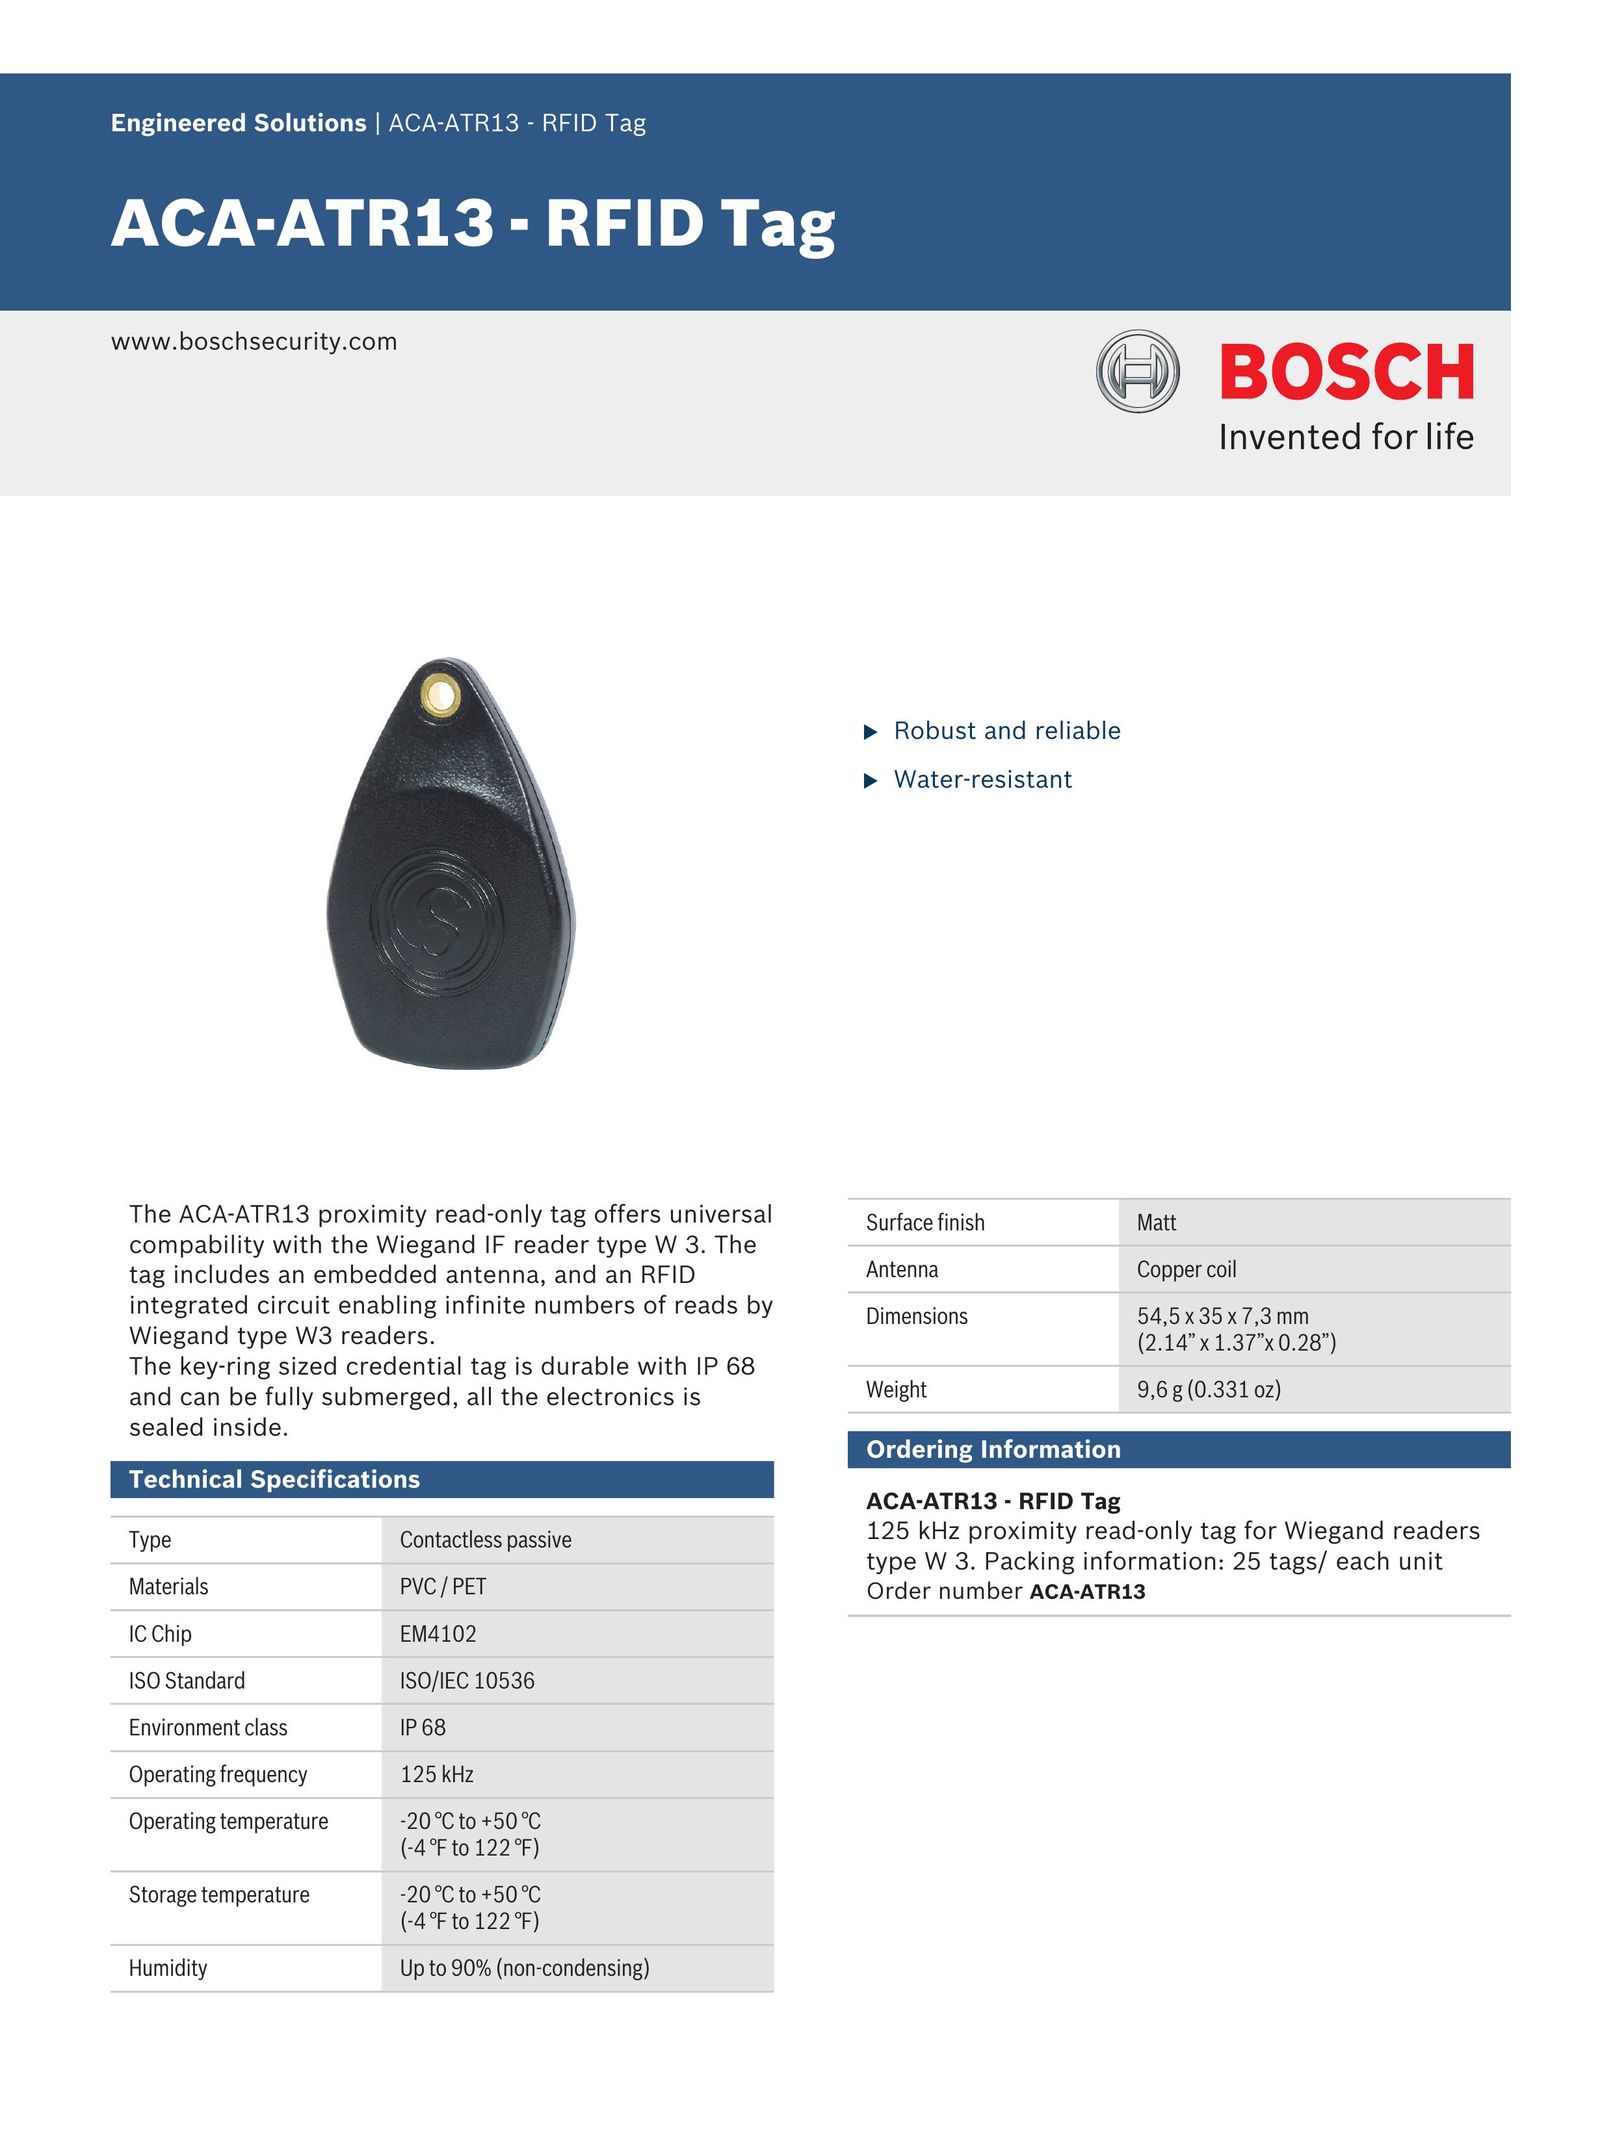 Bosch Appliances ACAATR13 Home Security System User Manual